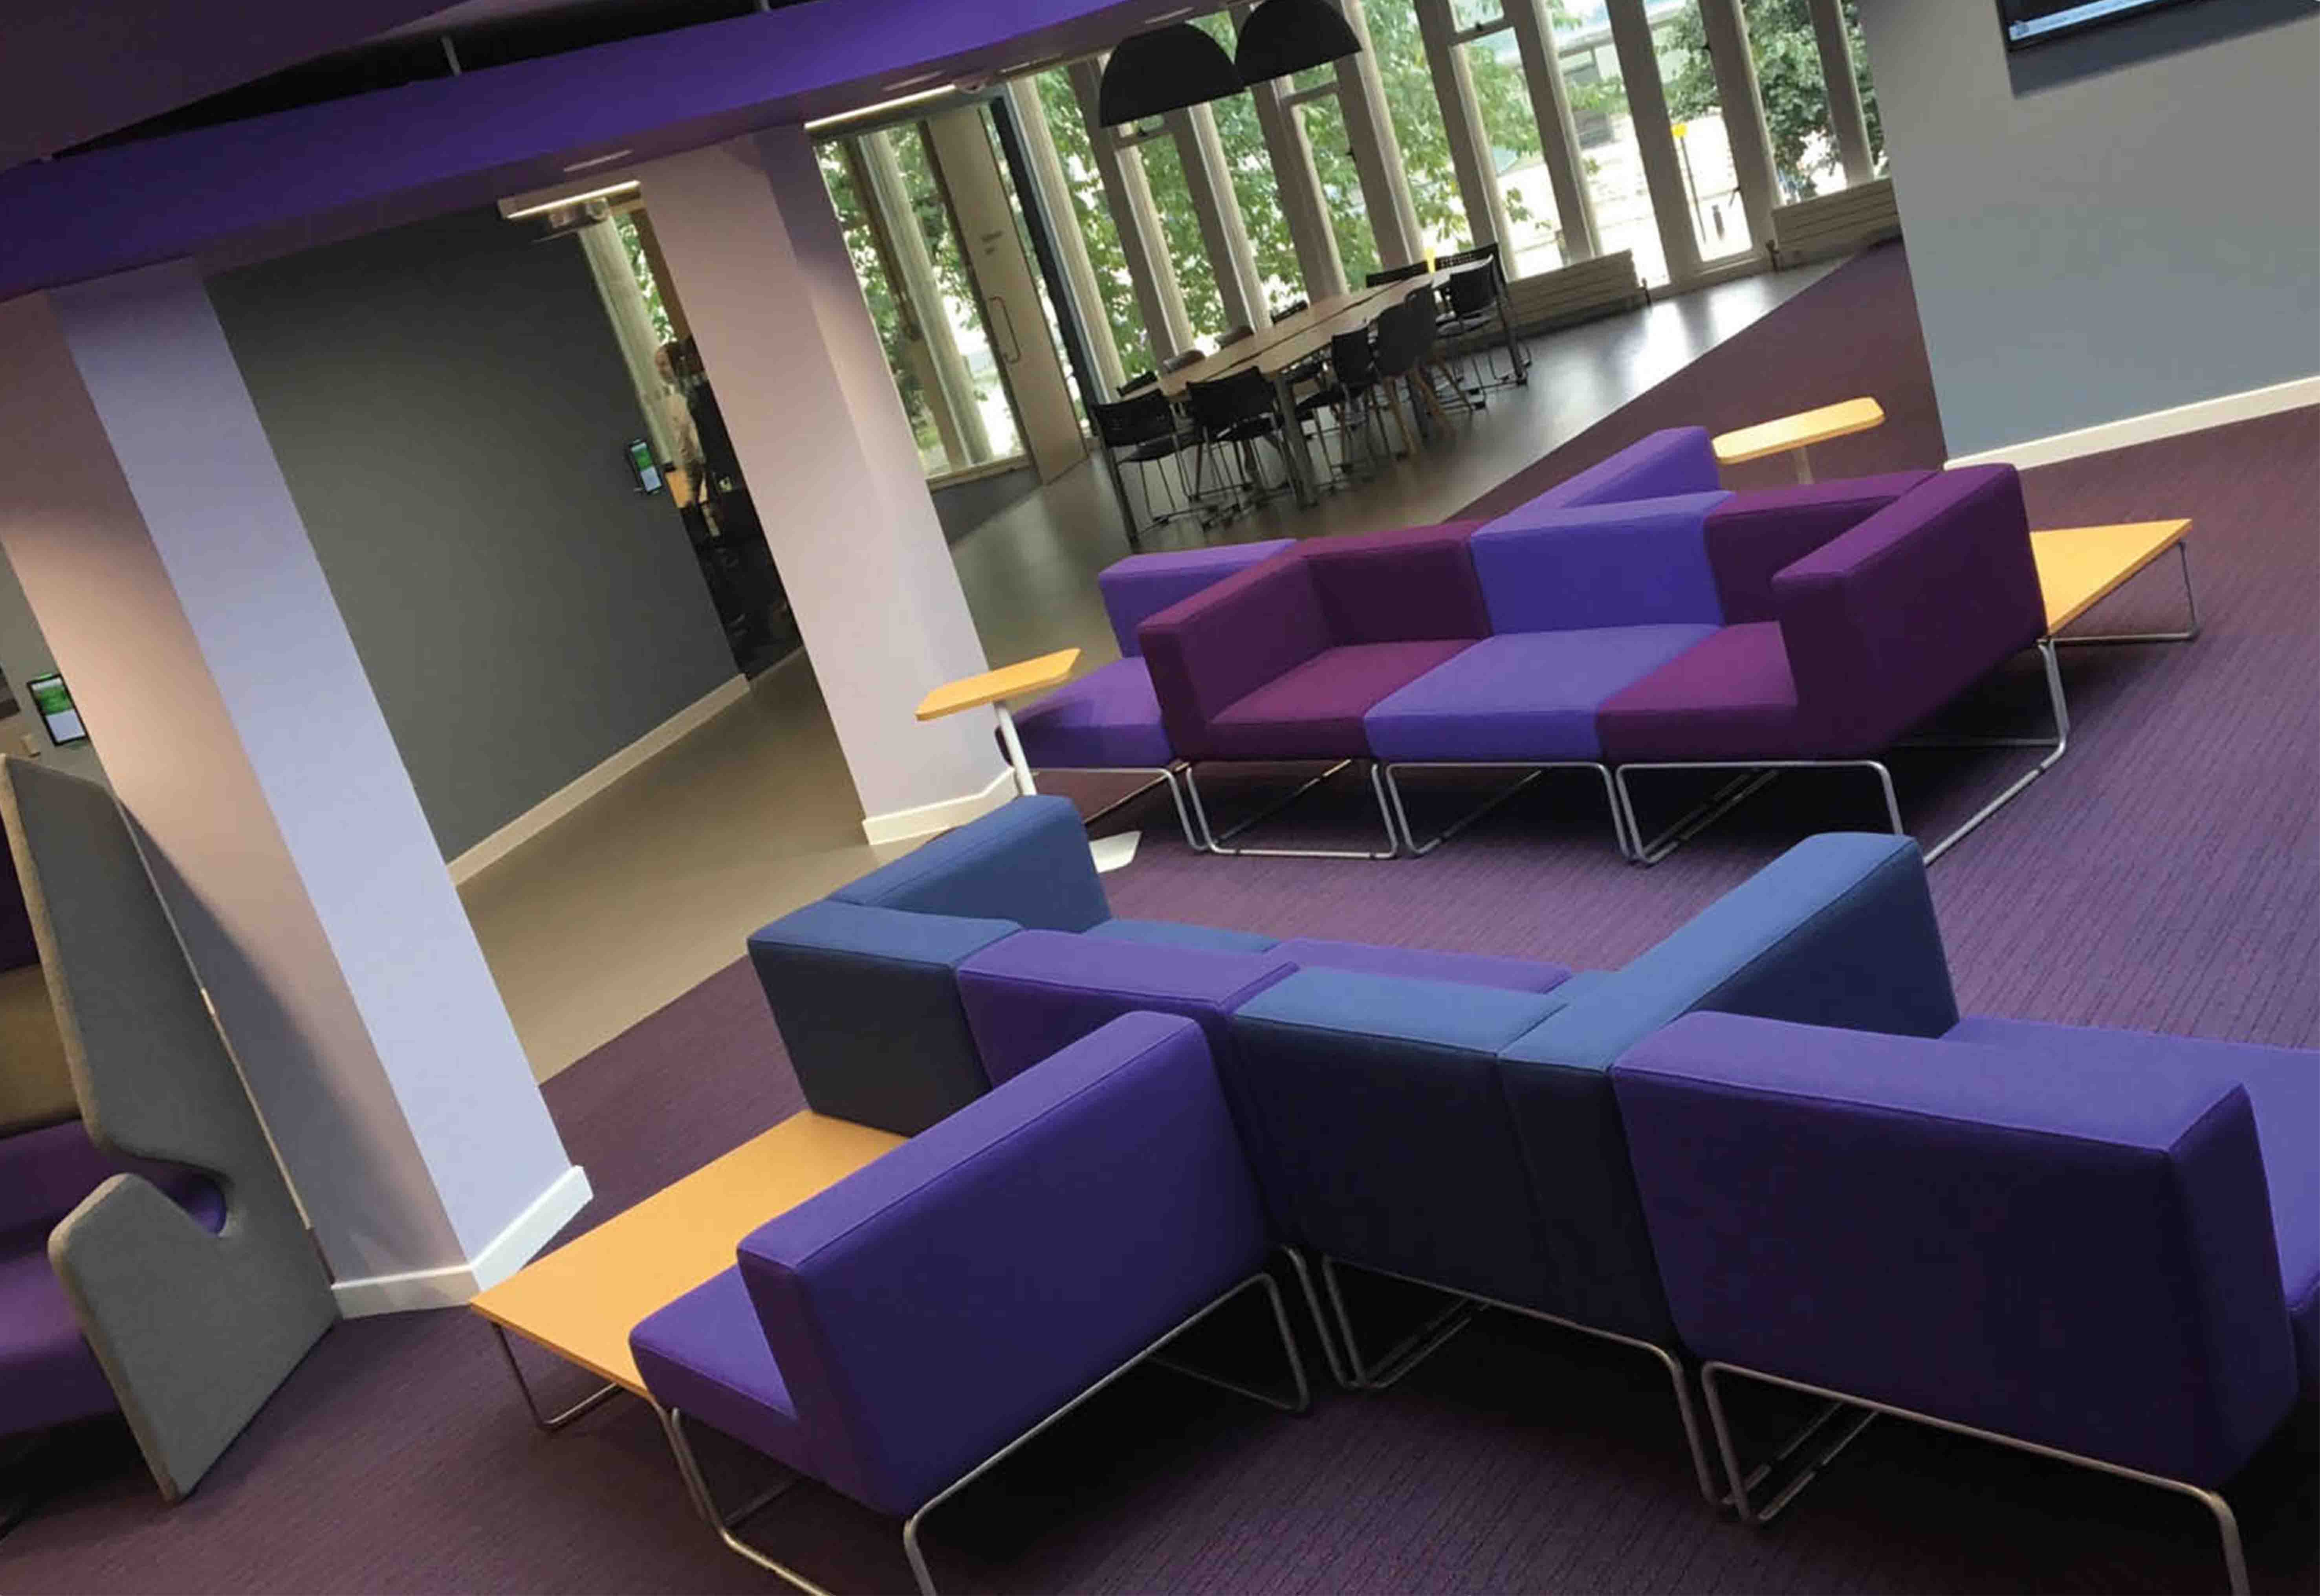 Northumbria University modular seating